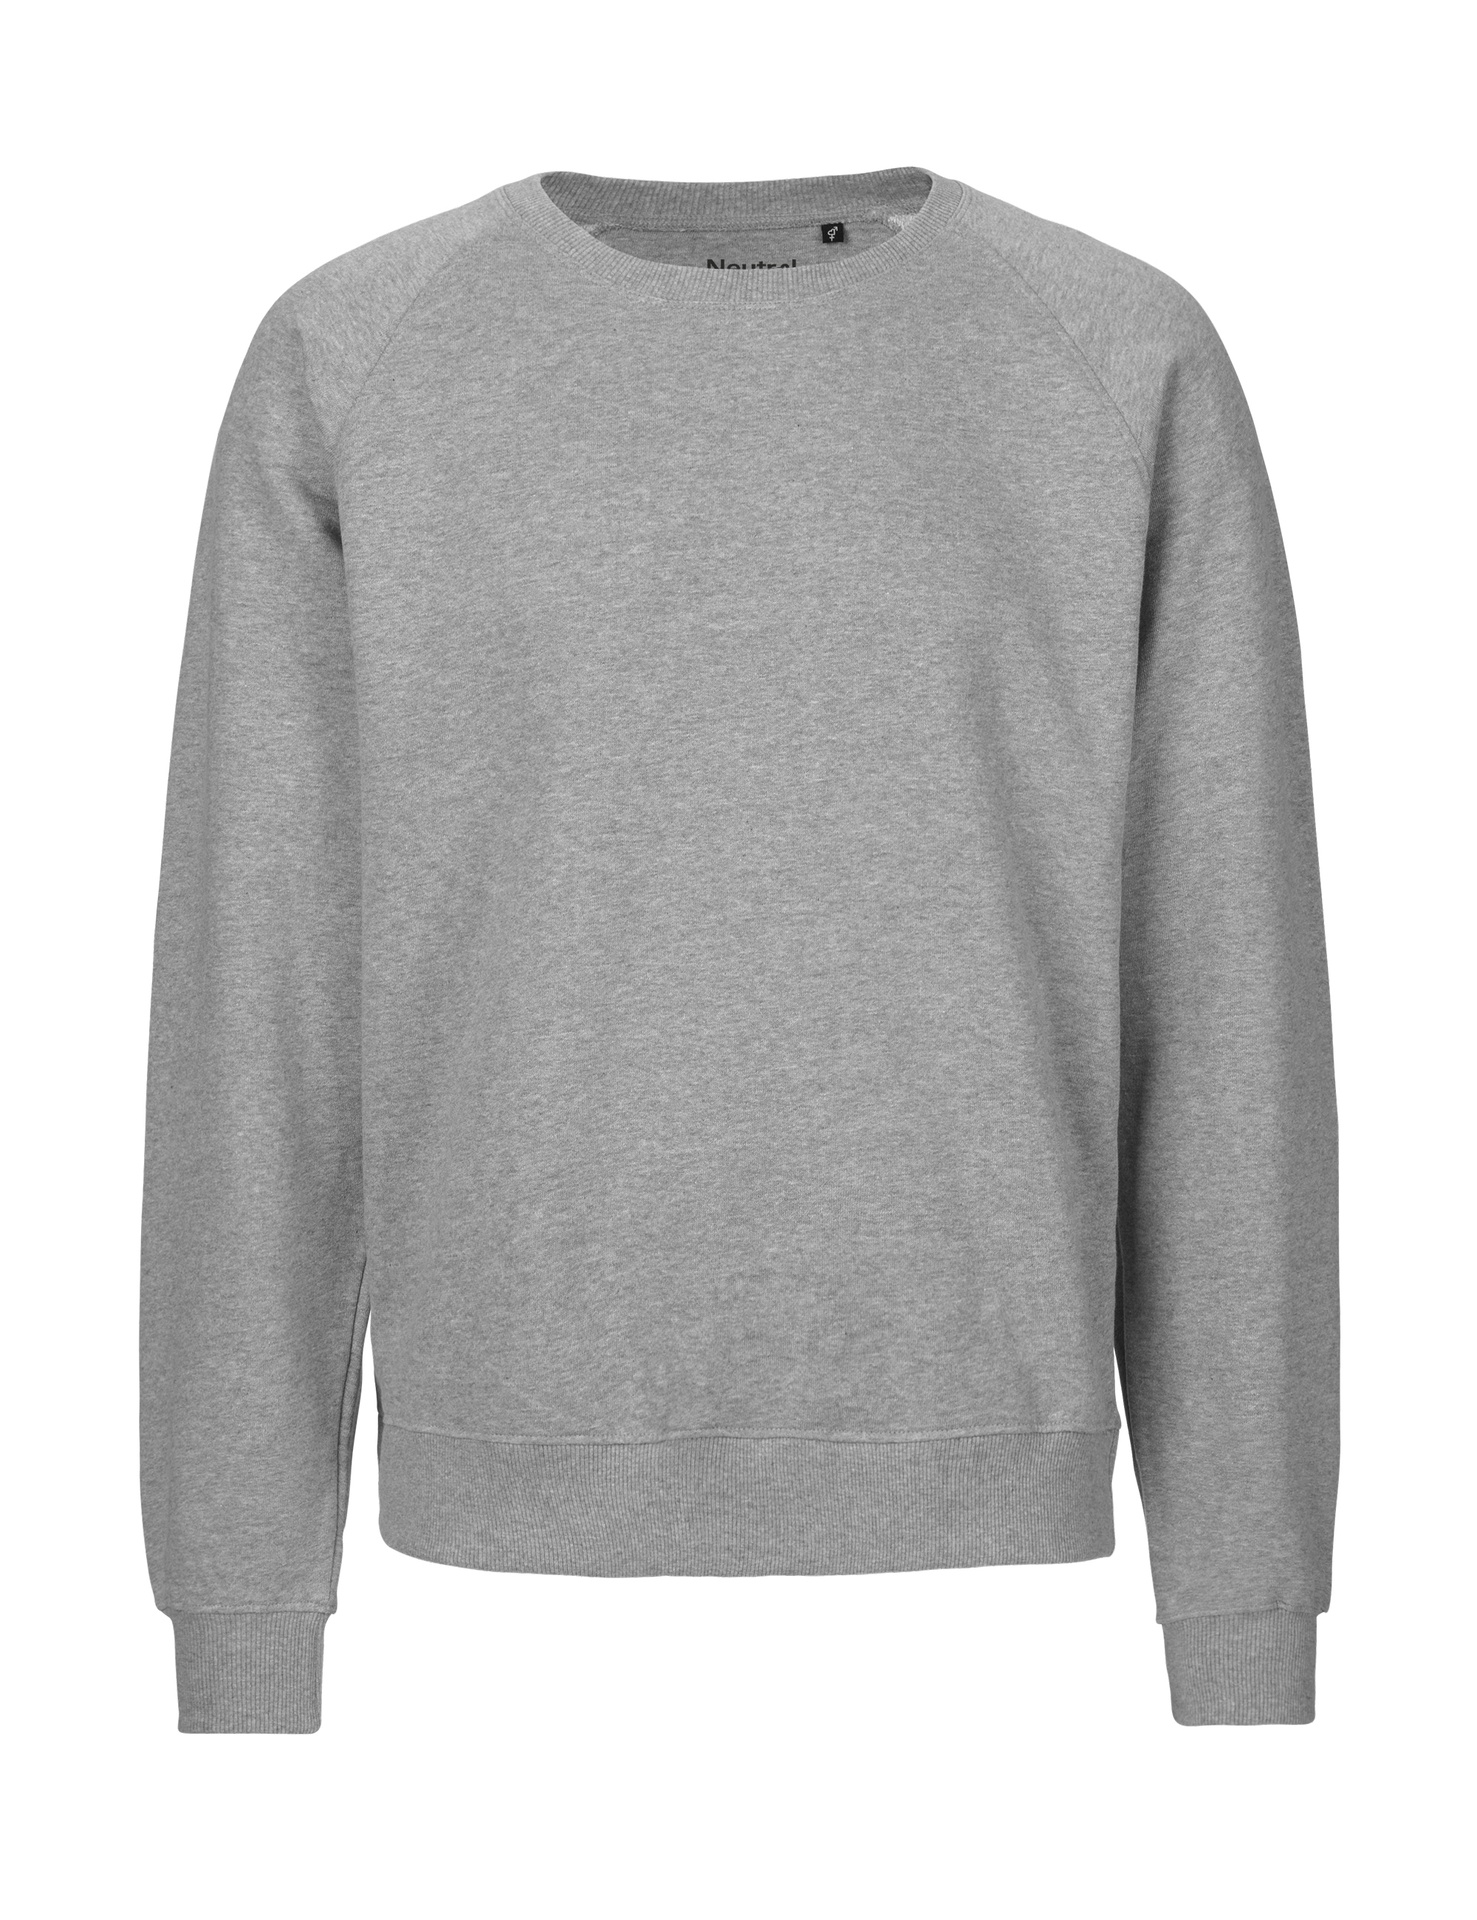 [PR/02742] Unisex Sweatshirt (Sport Grey 21, XS)